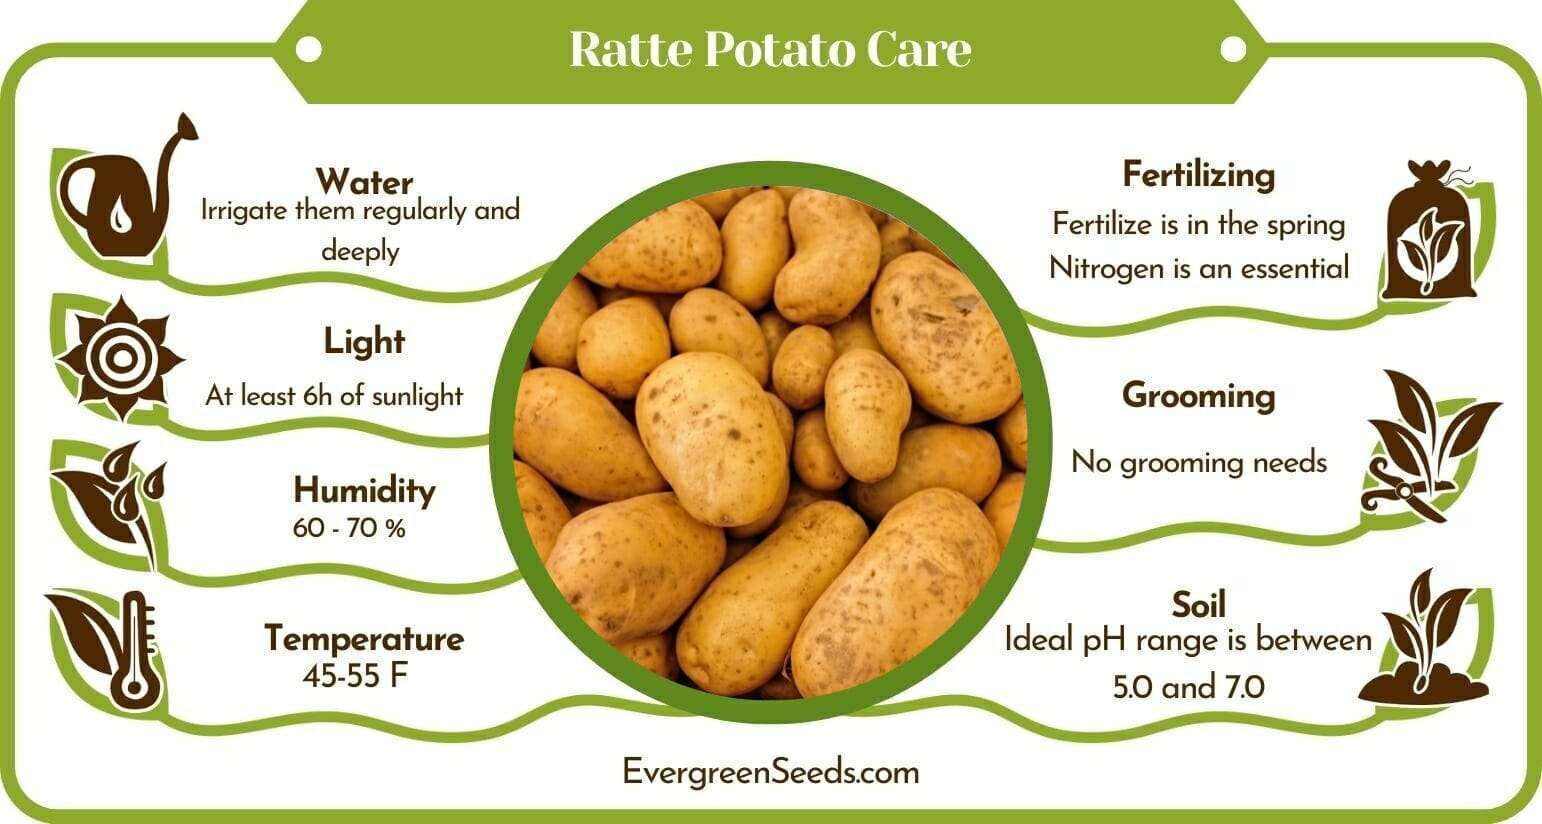 The Ratte Potato Care Infographic